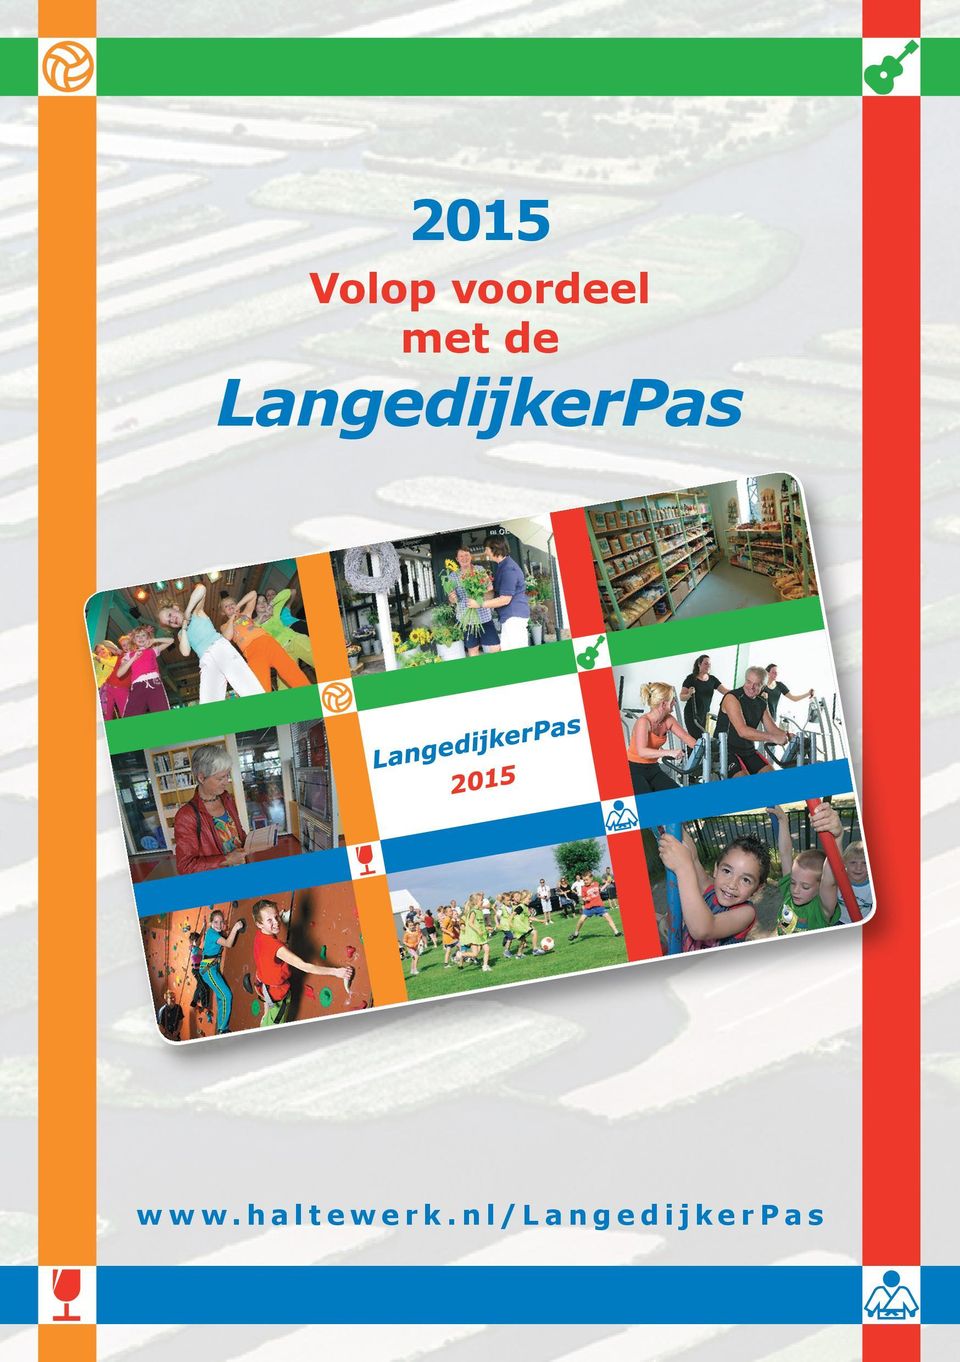 LangedijkerPas www.